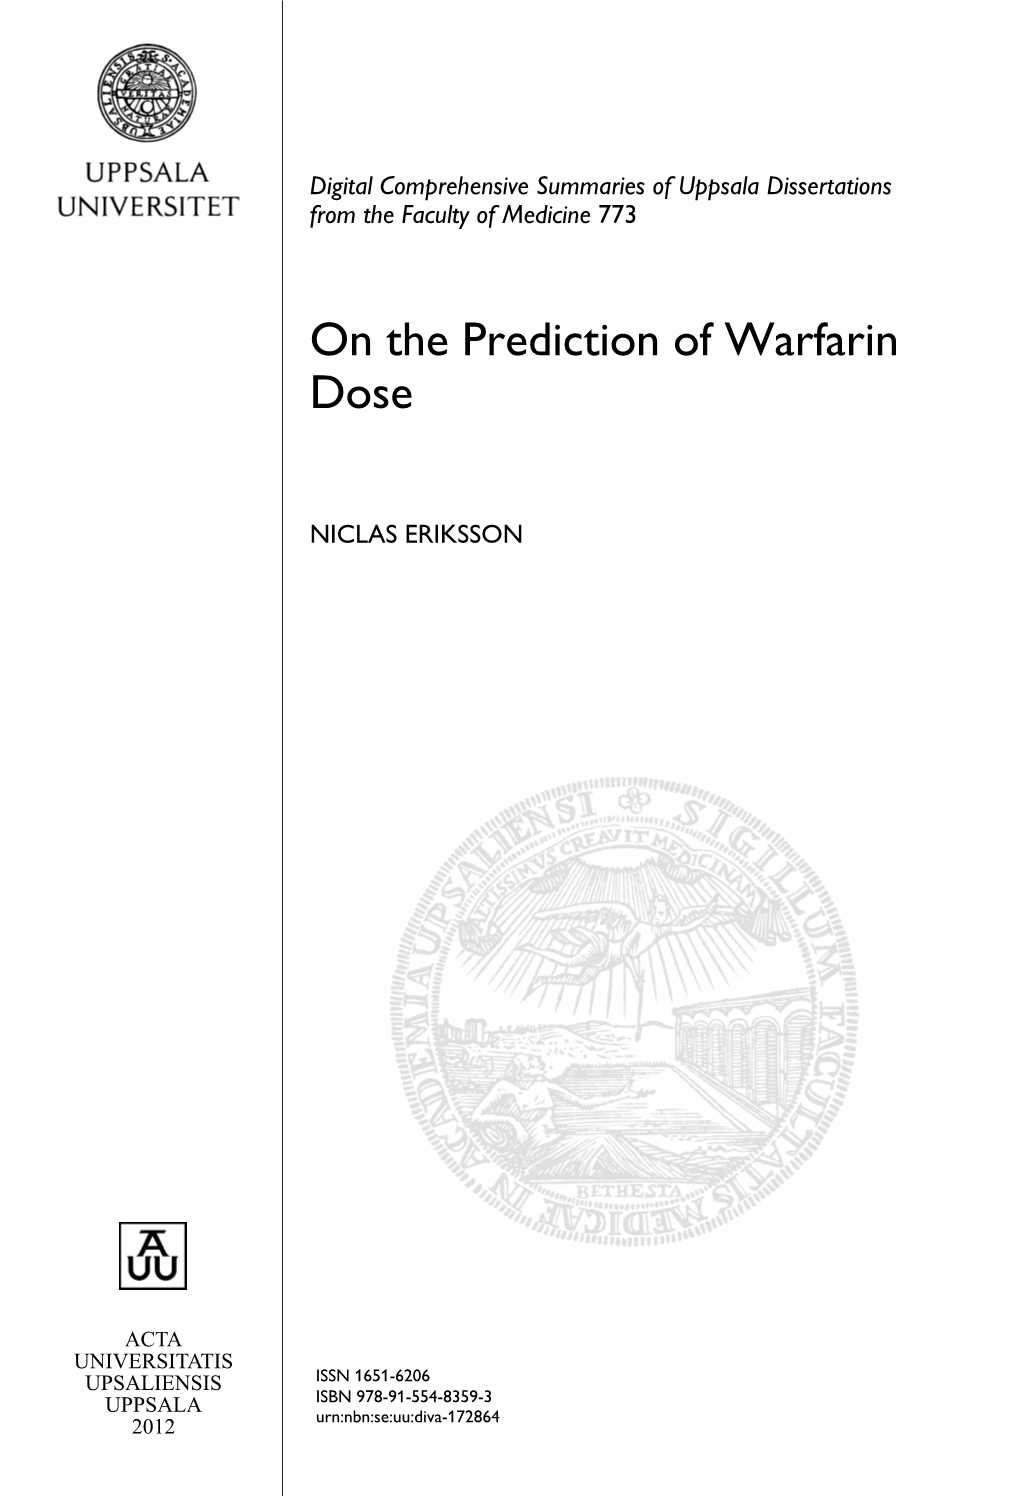 On the Prediction of Warfarin Dose